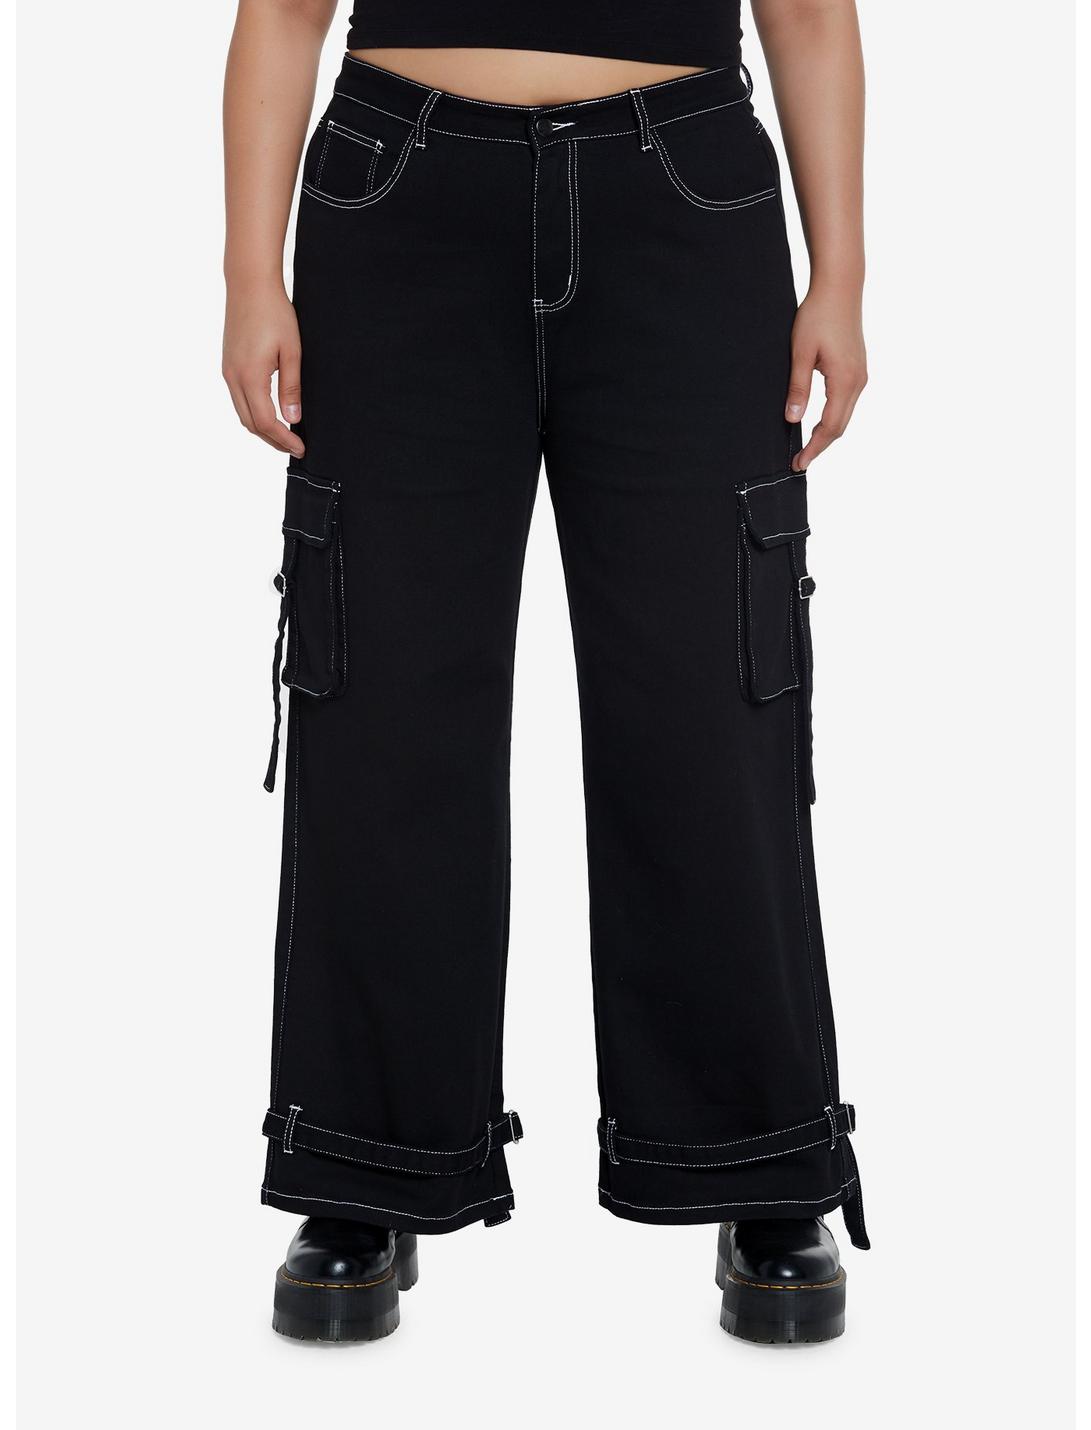 Black & White Contrast Stitch Strap Carpenter Pants Plus Size, BLACK  WHITE, hi-res